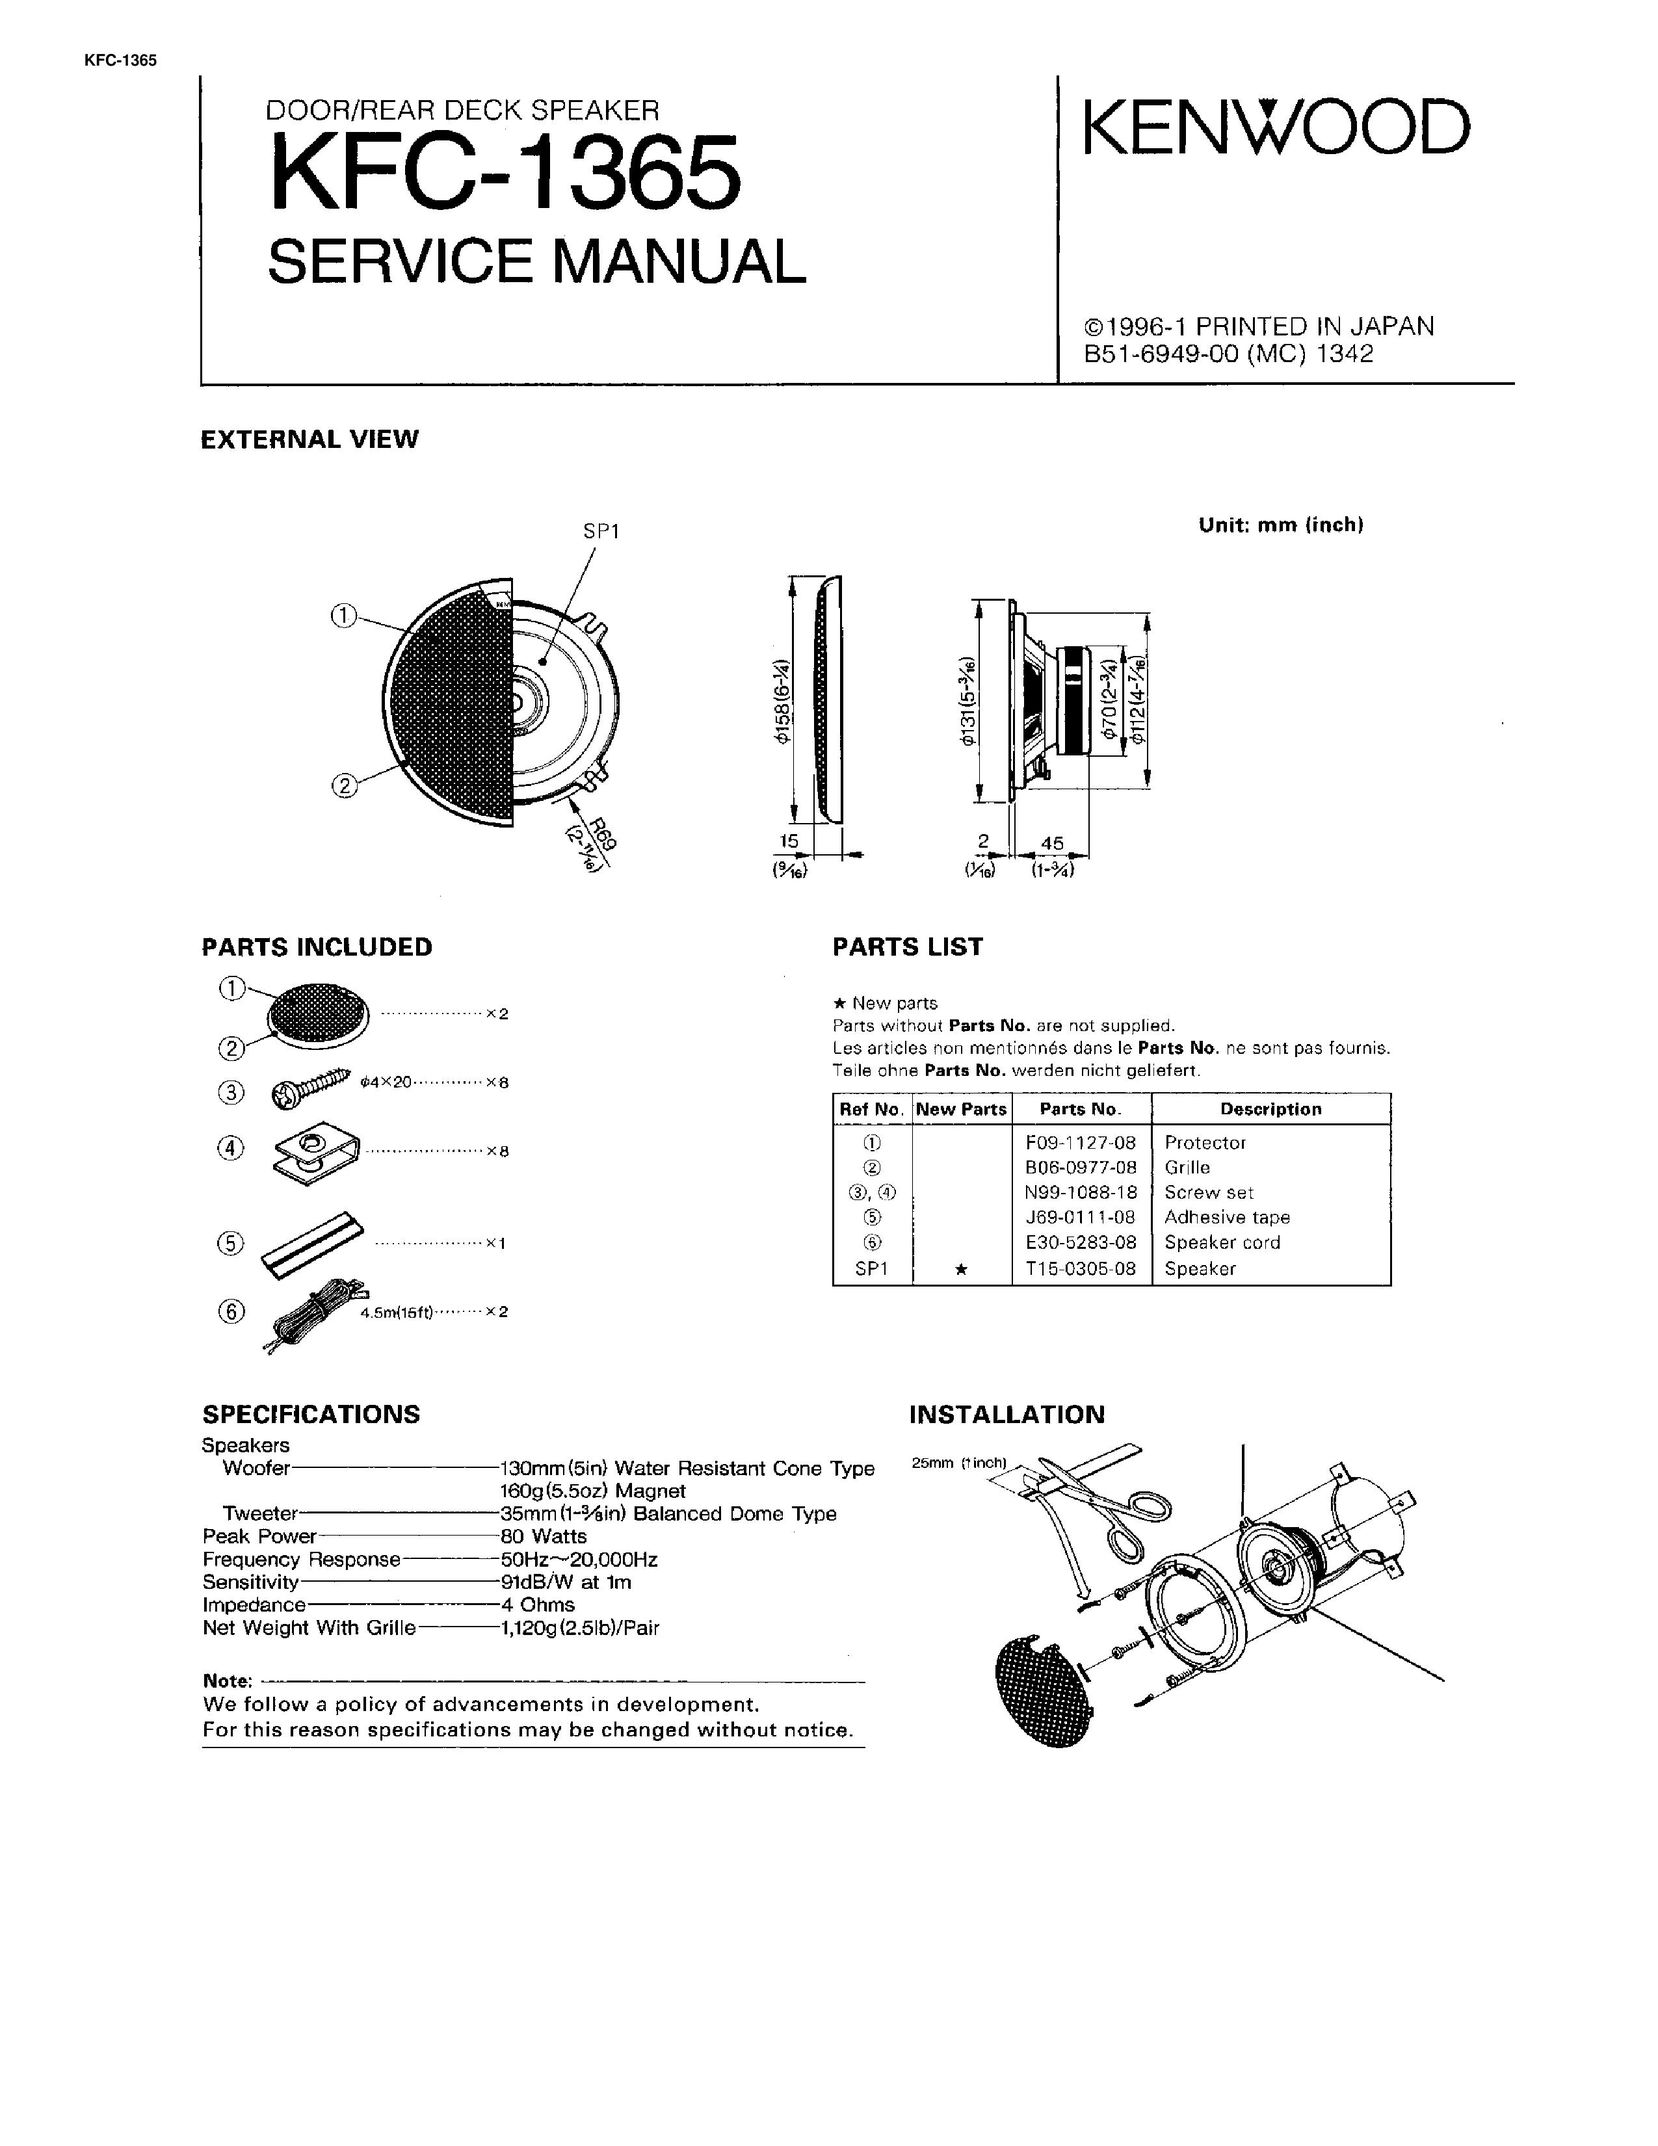 Kenwood KFC-1365 Car Speaker User Manual